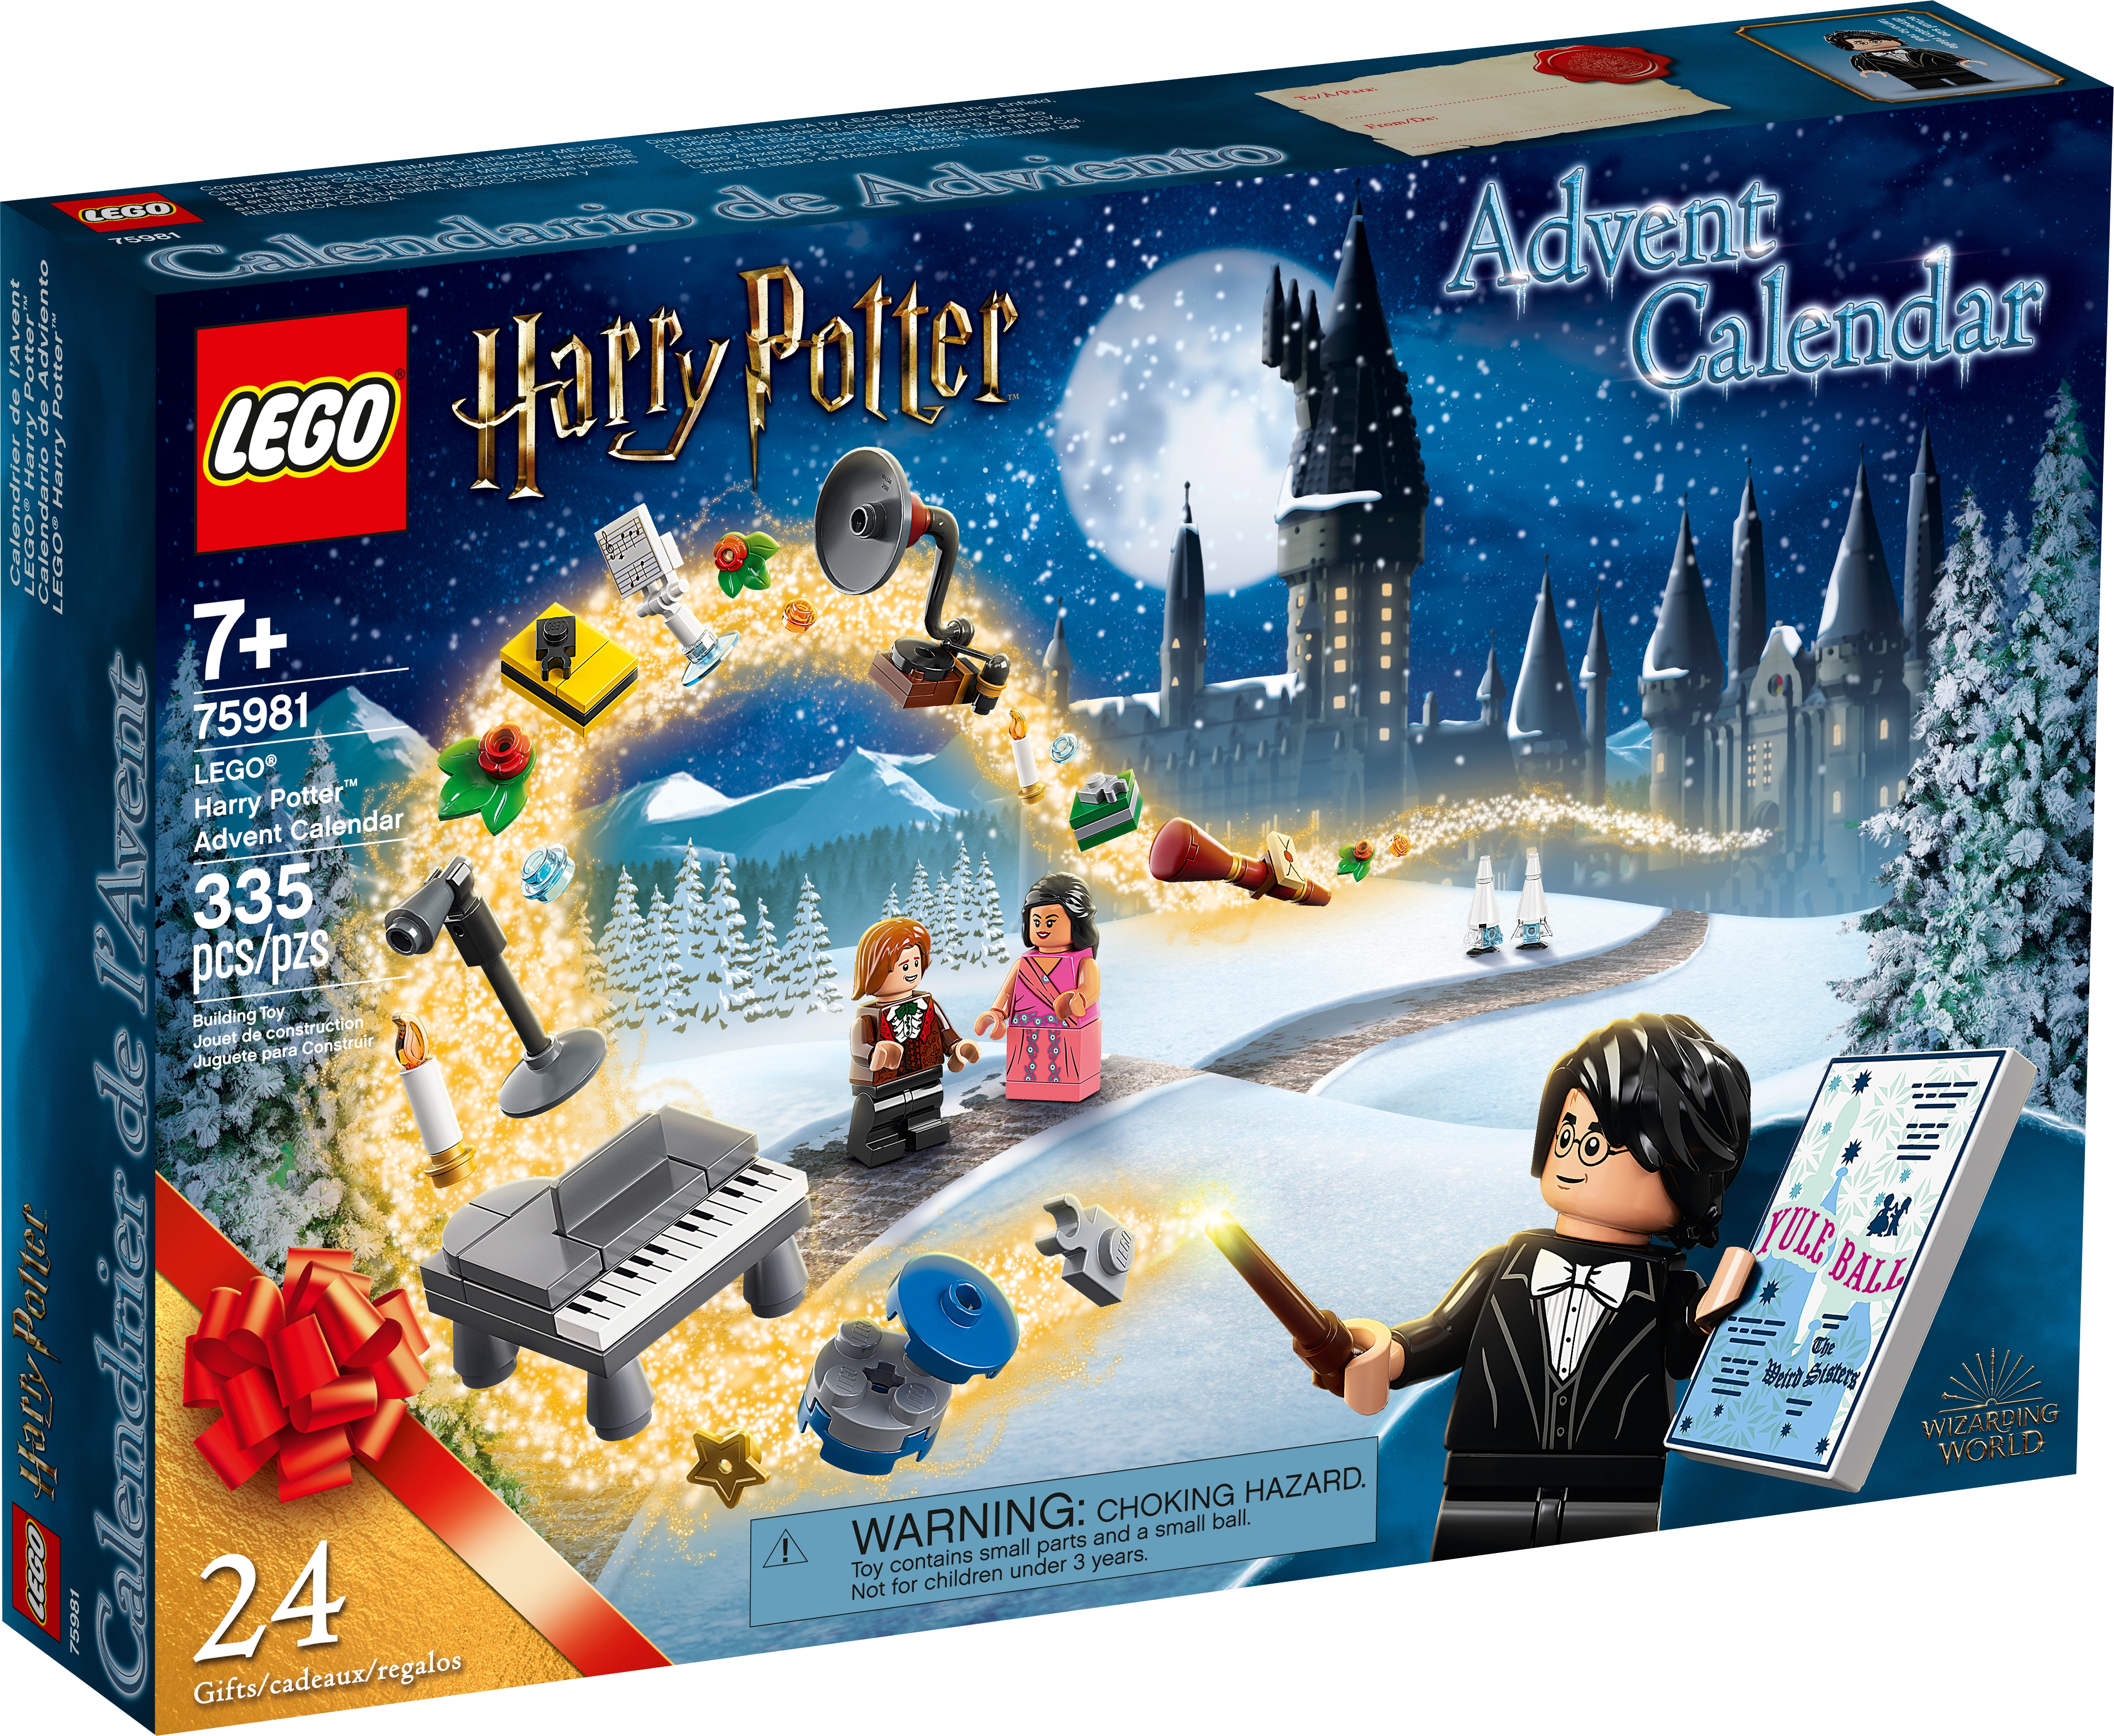 Lego Harry Potter Adventkalender 2020 656581102